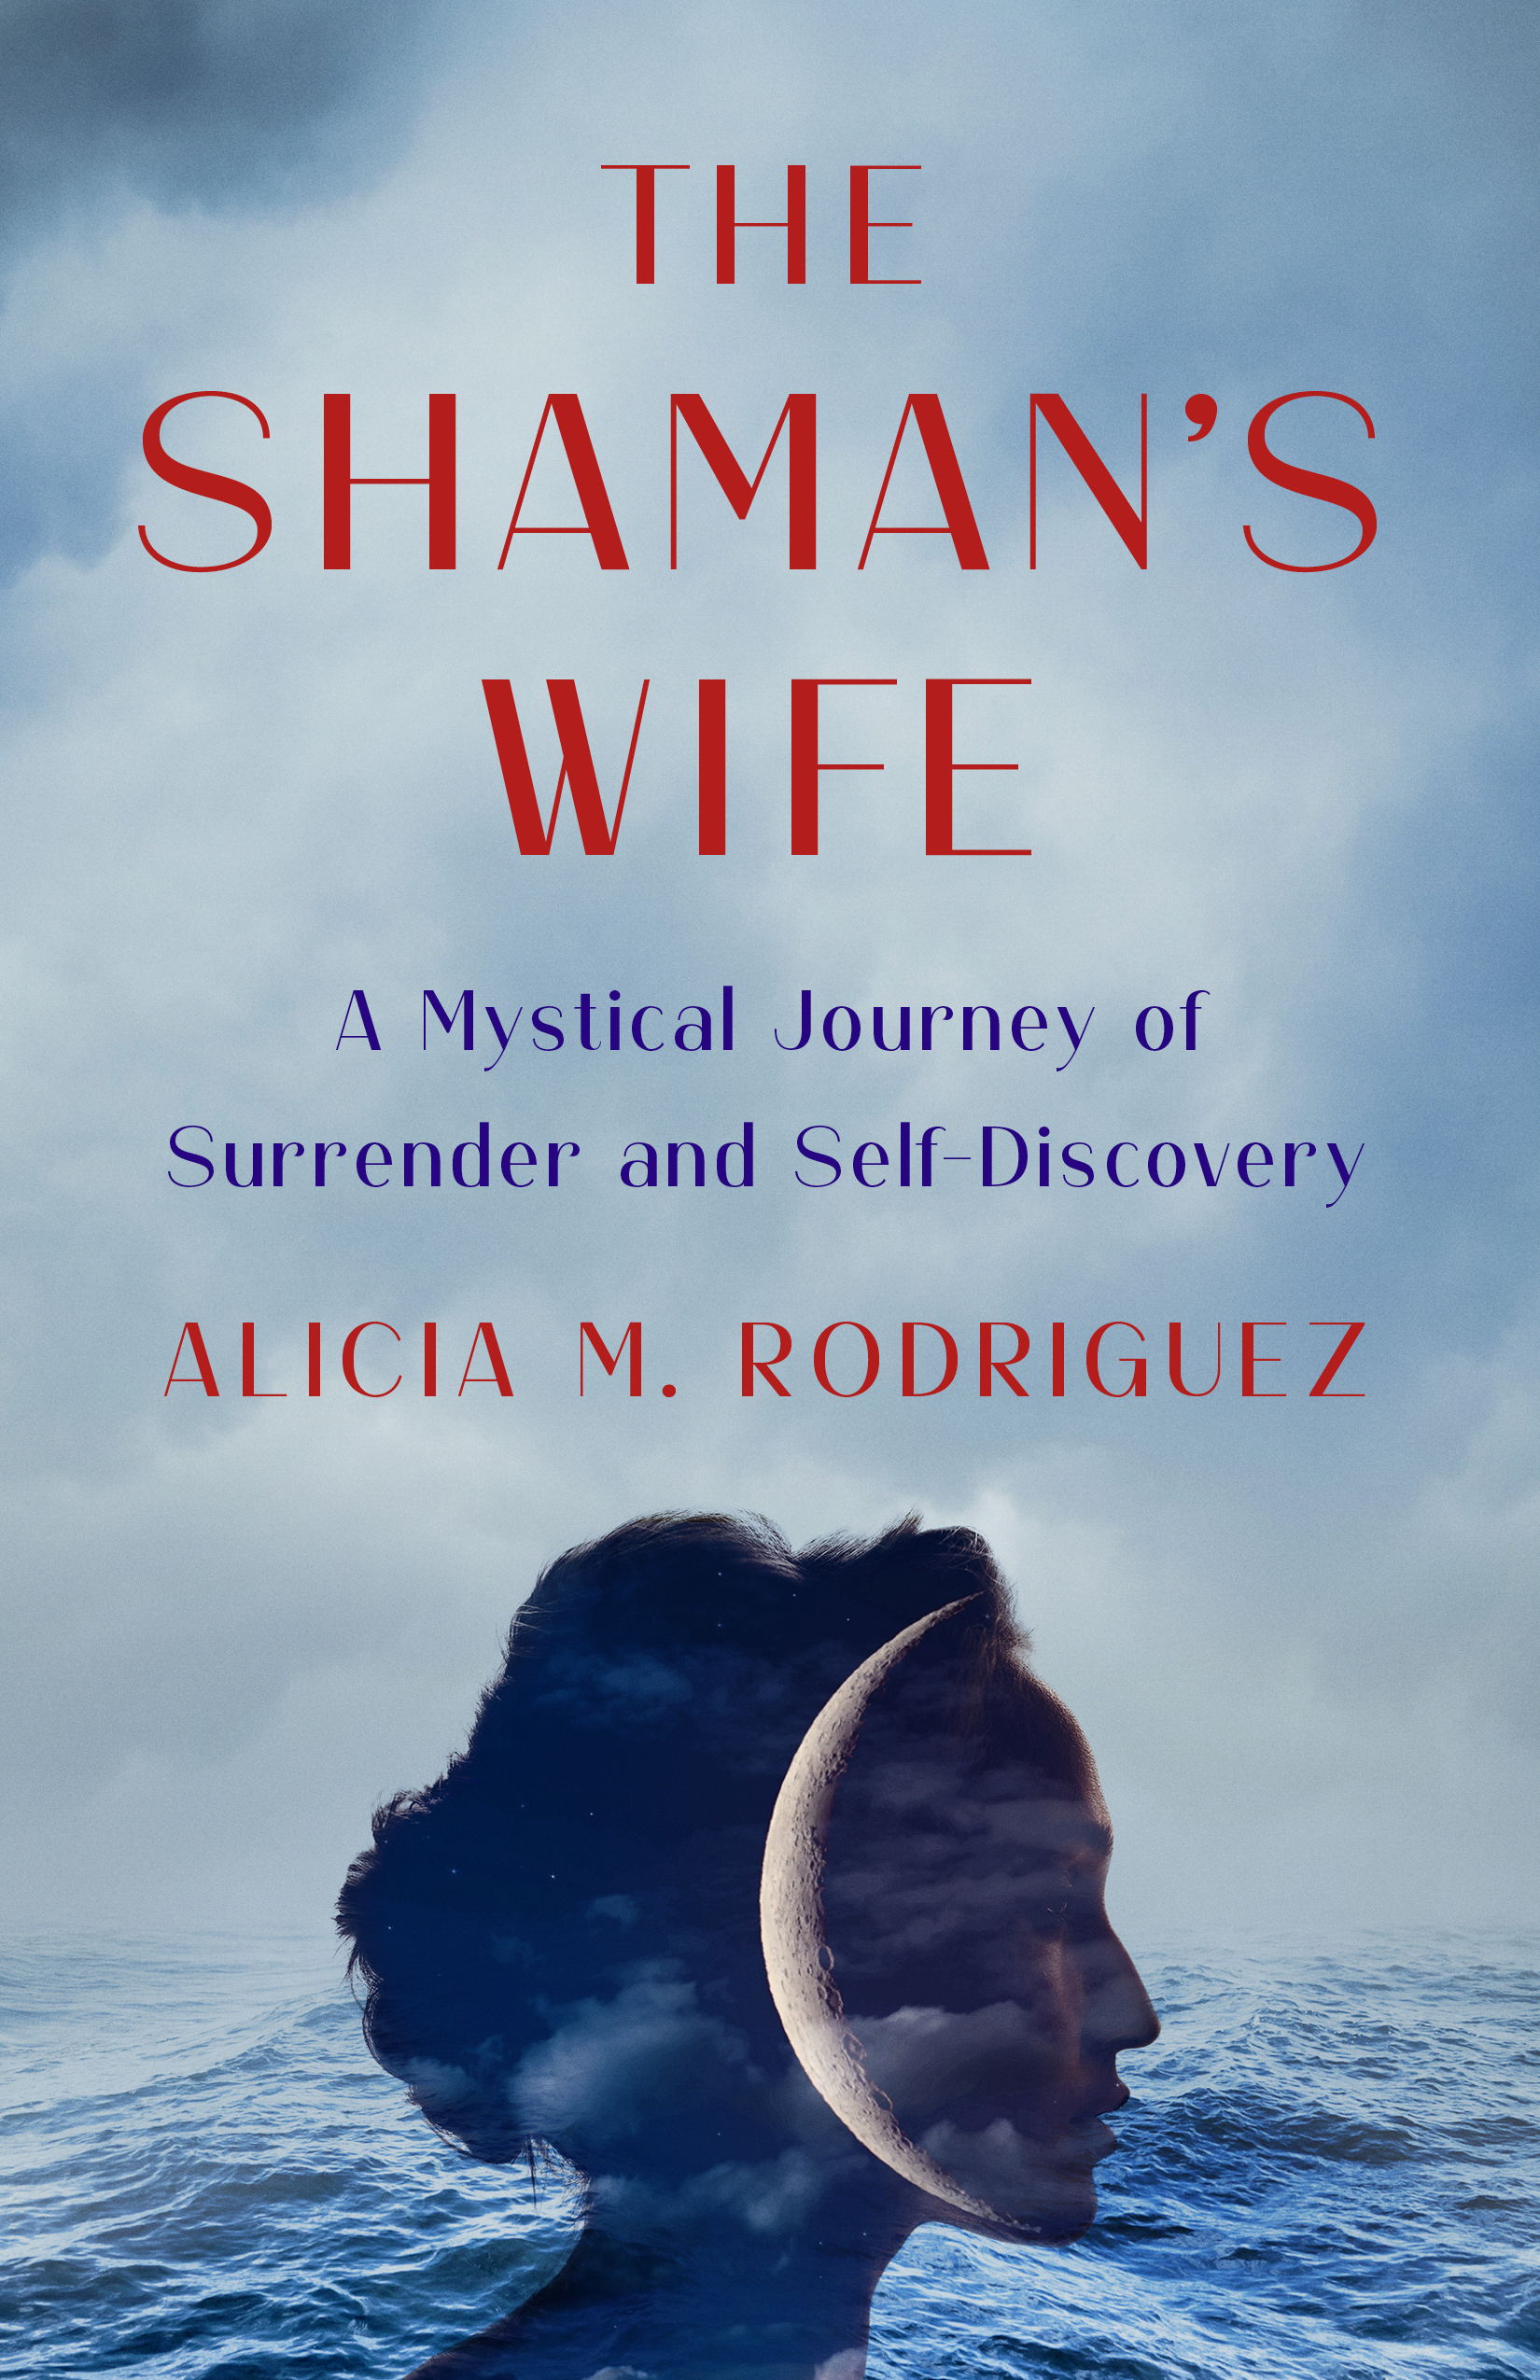 The Shaman's Wife